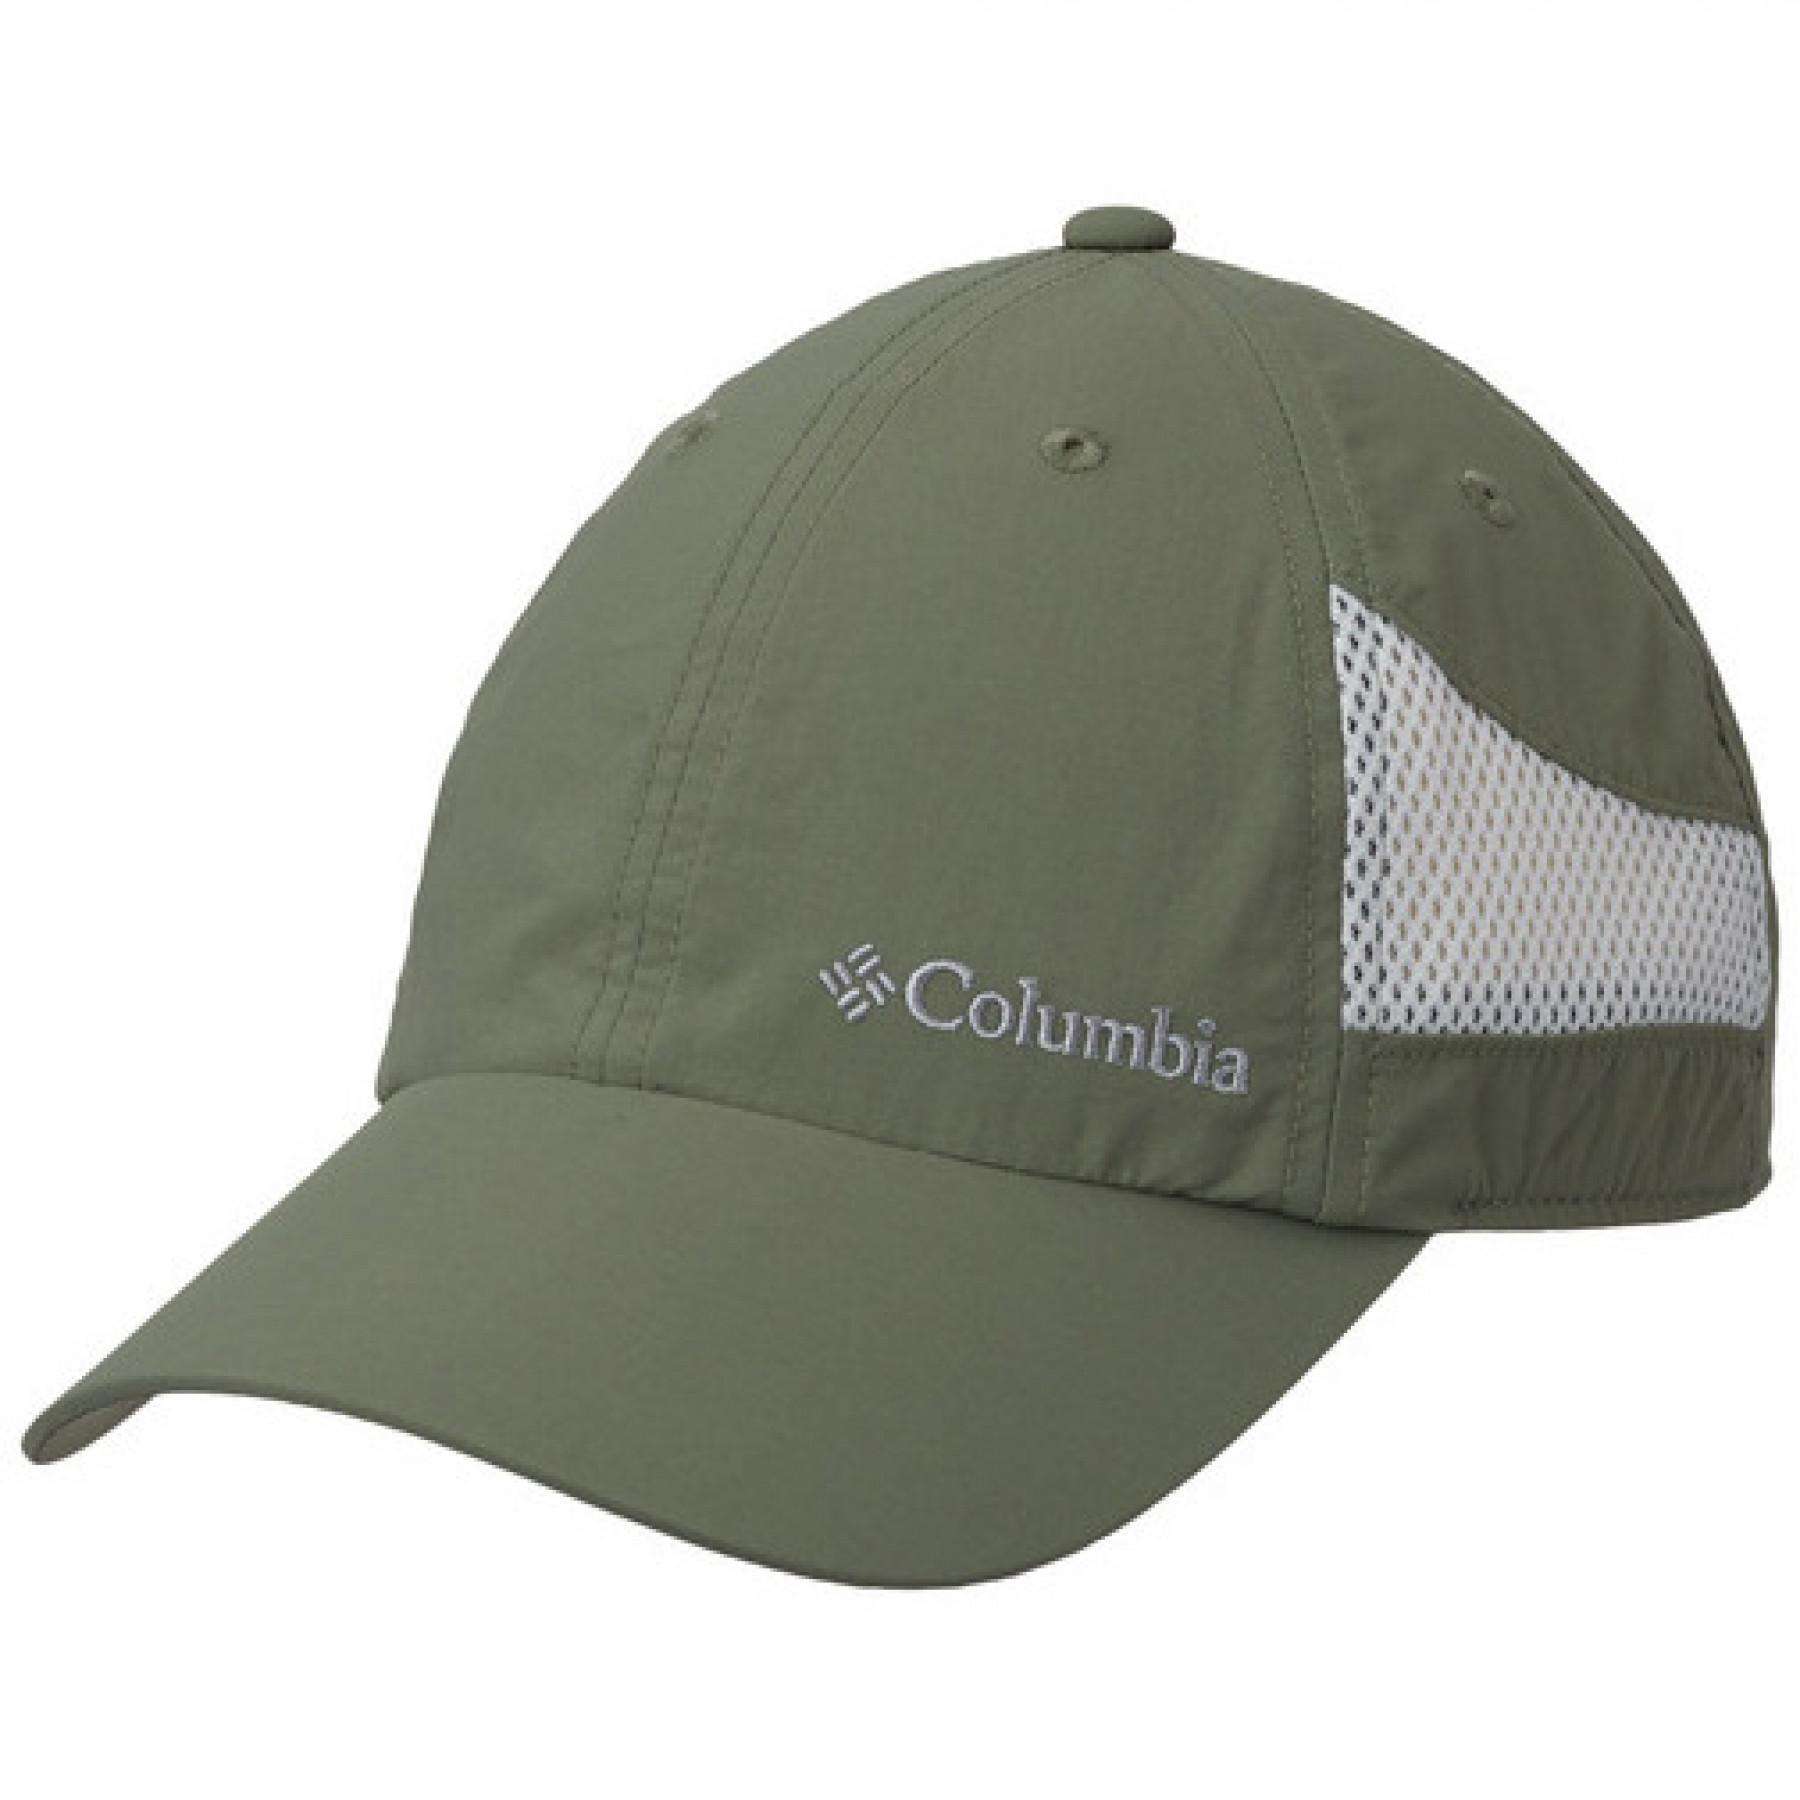 Cap Columbia Tech Shade